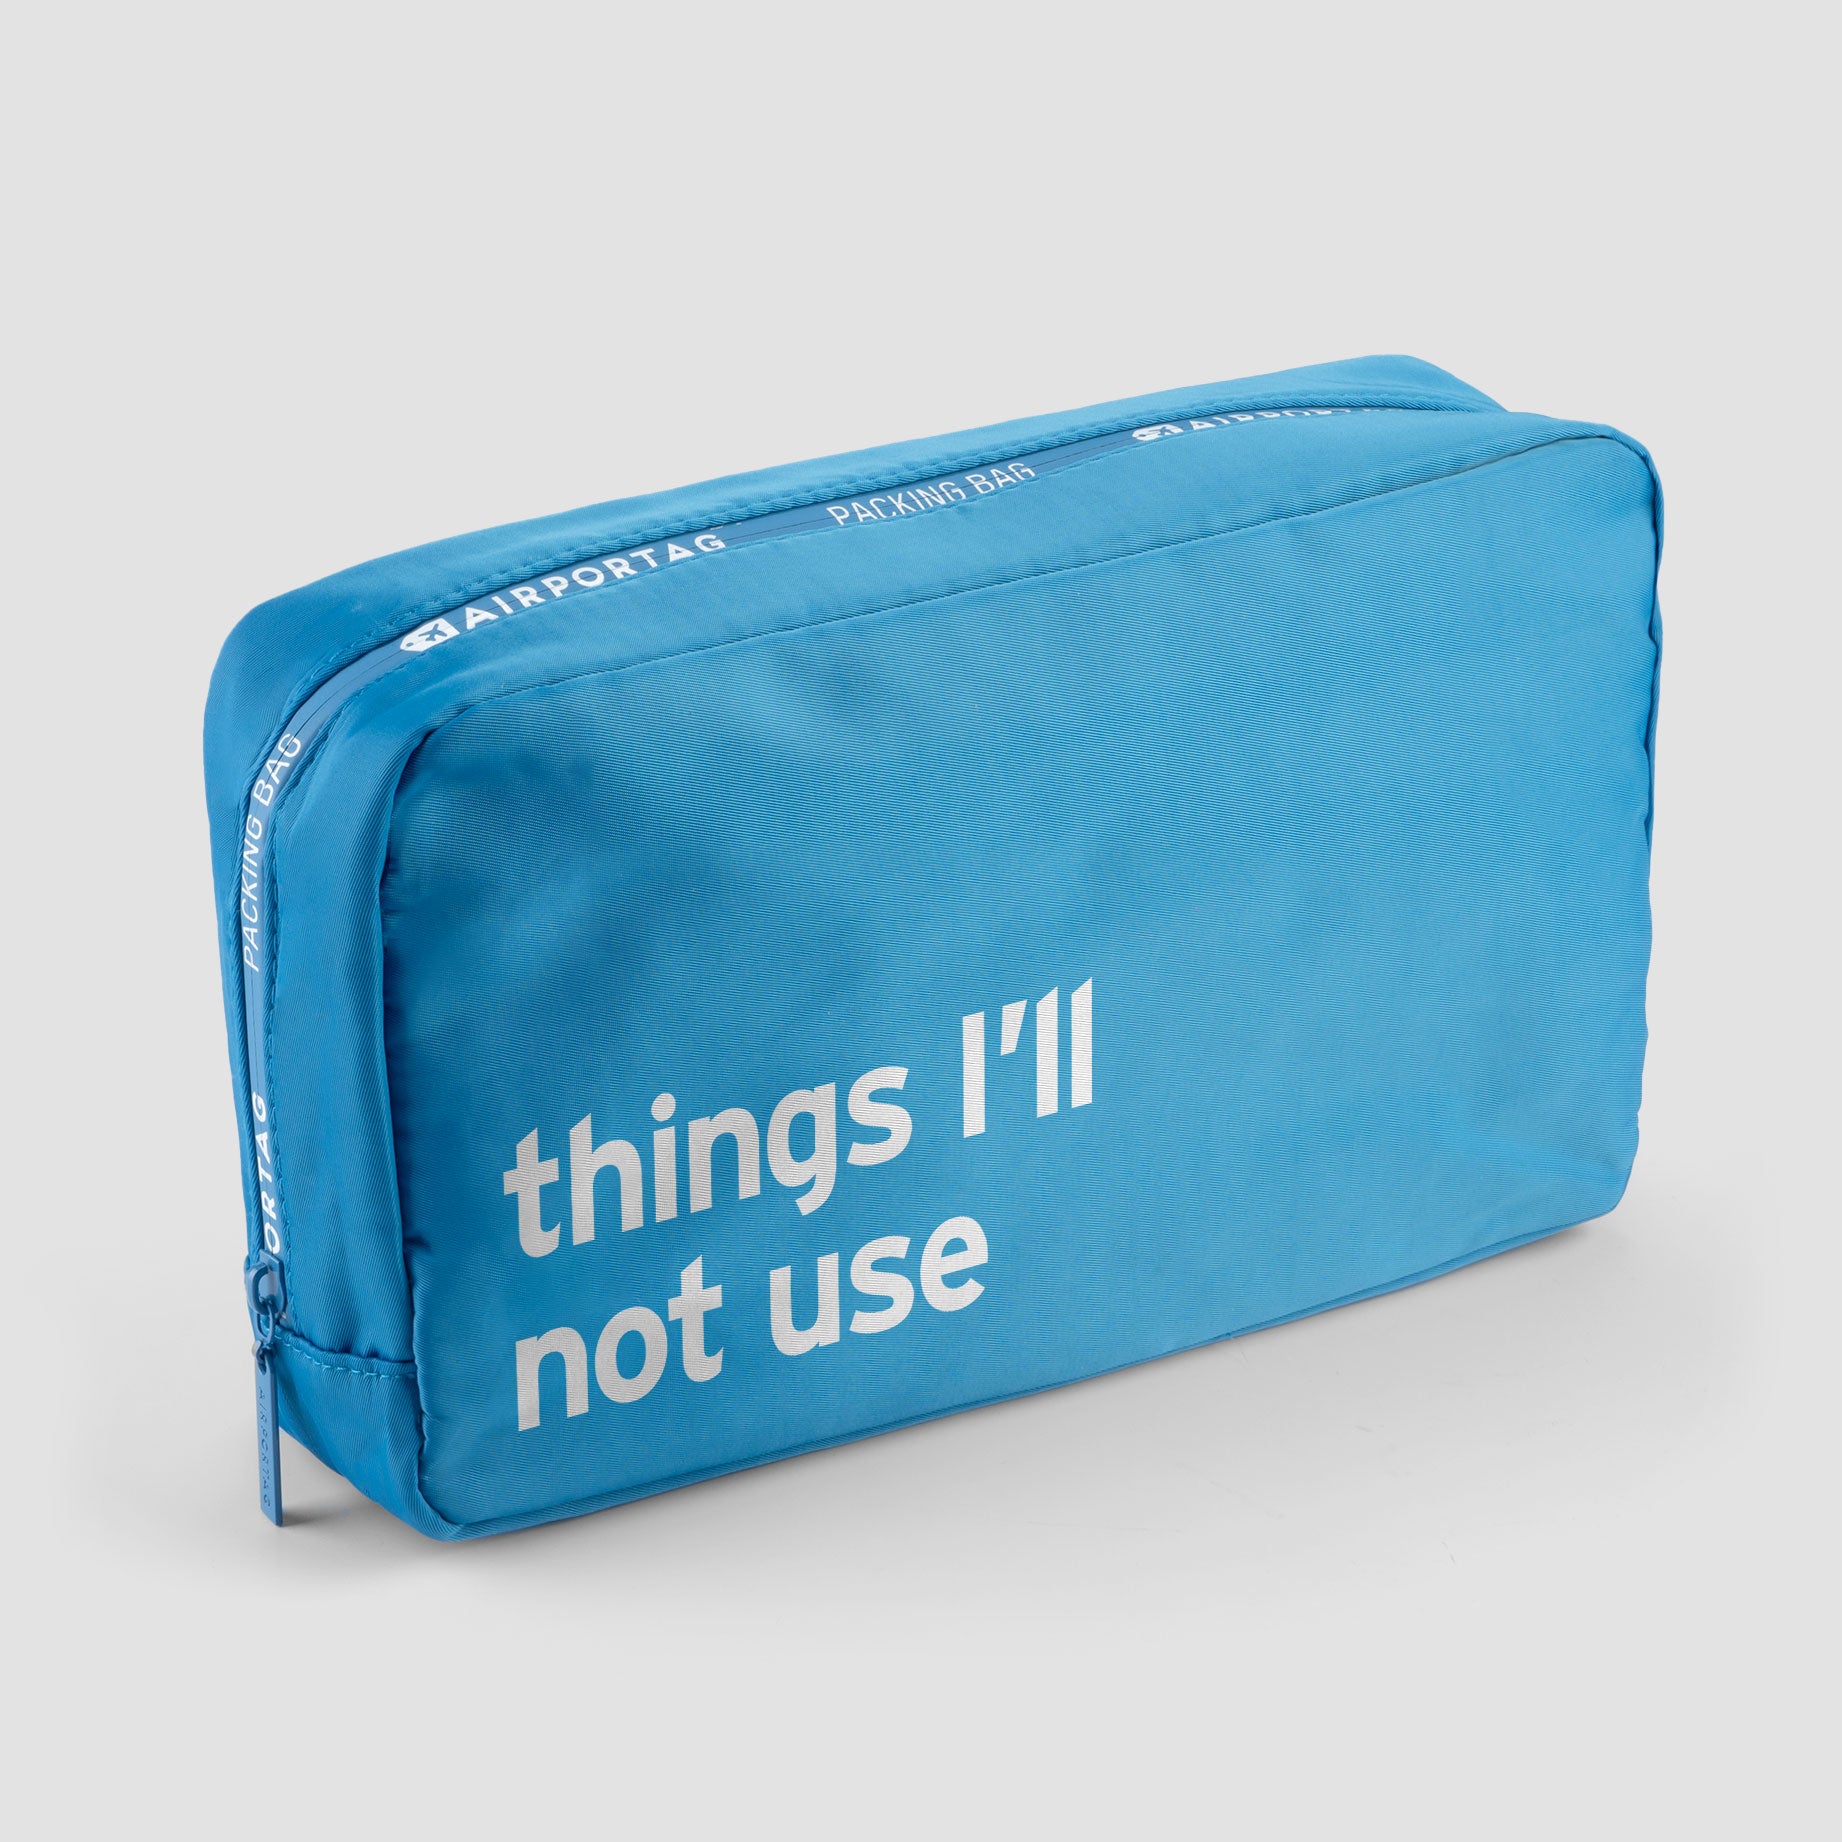 Packing Bag - Things I'll not use - Airportag